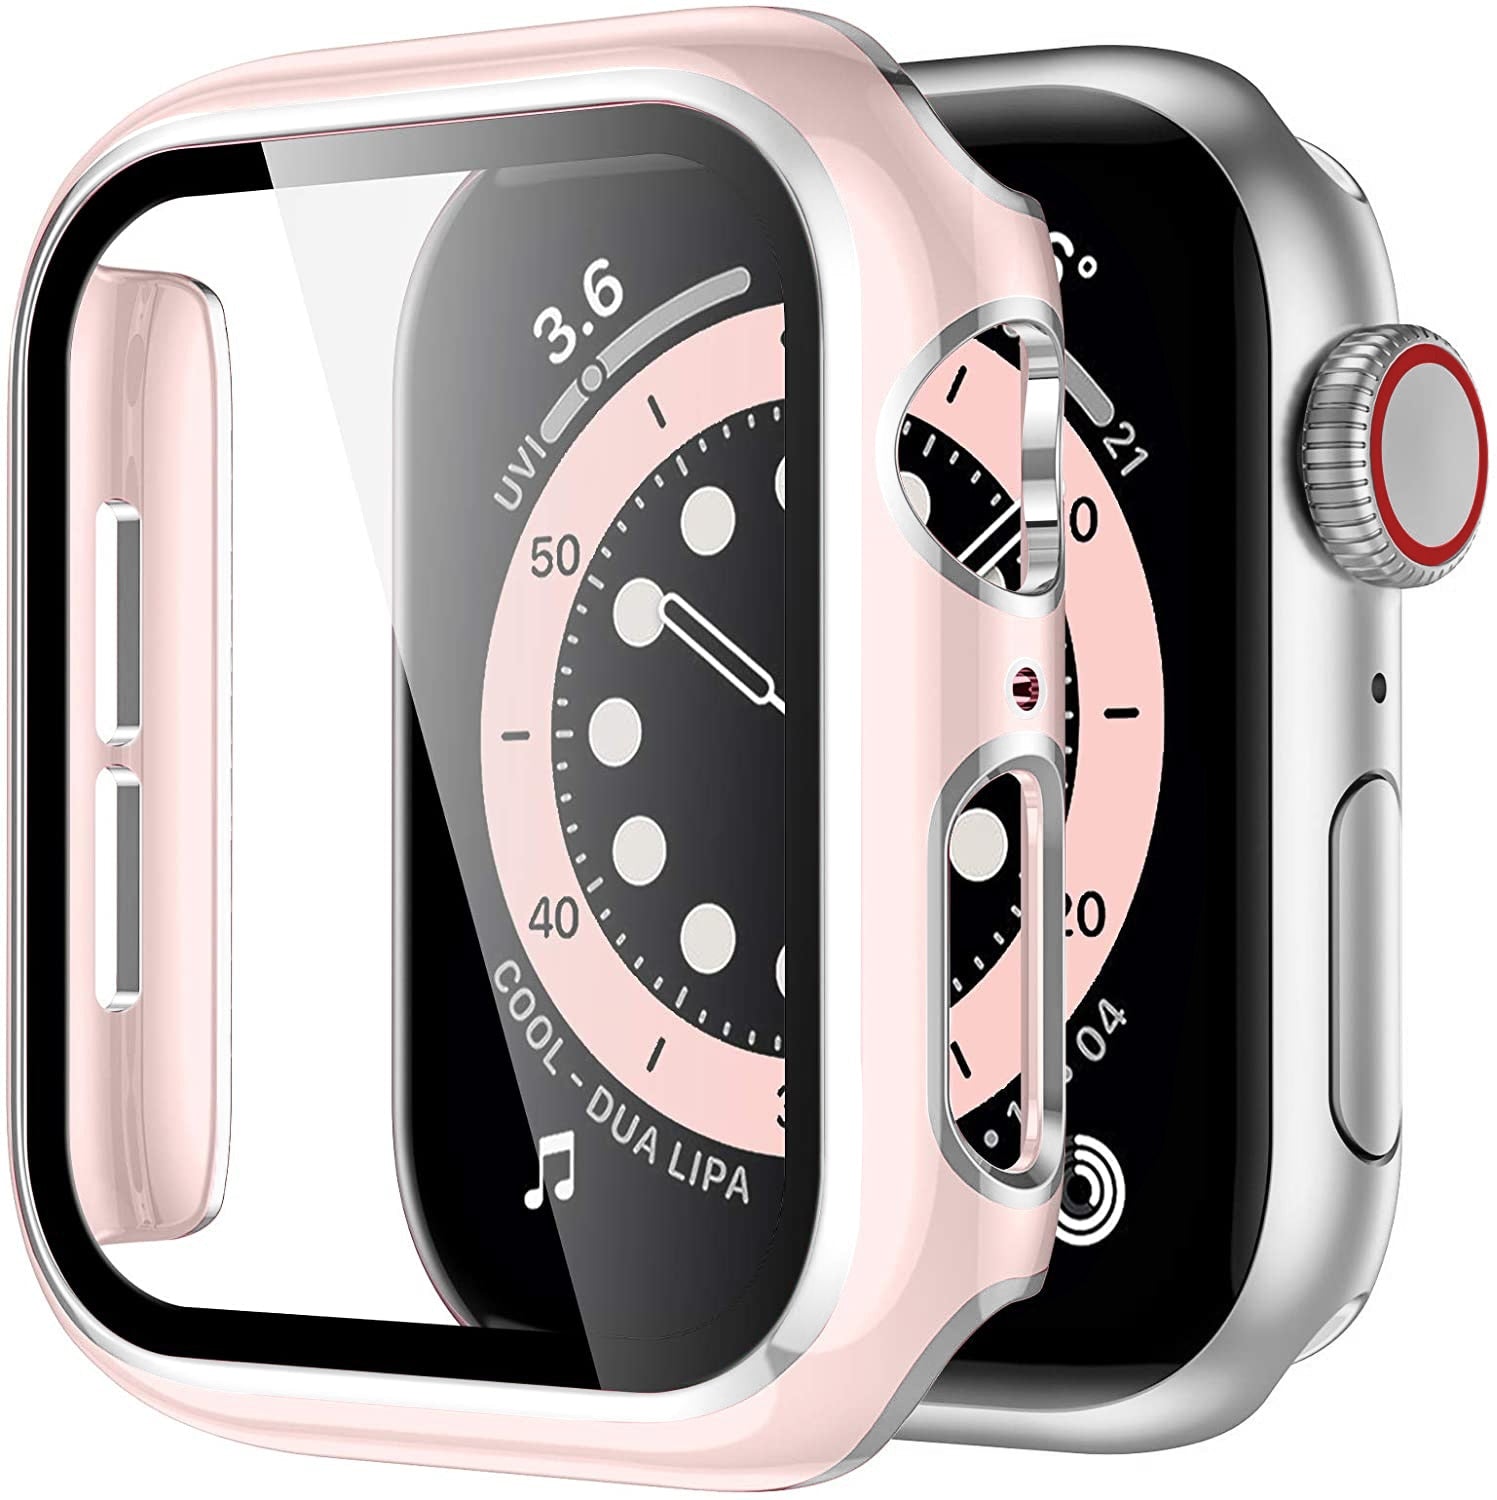 Diamond ™ - Protector + lámina Apple Watch - ENGLA Chile ® pink silver / 38mm series 321